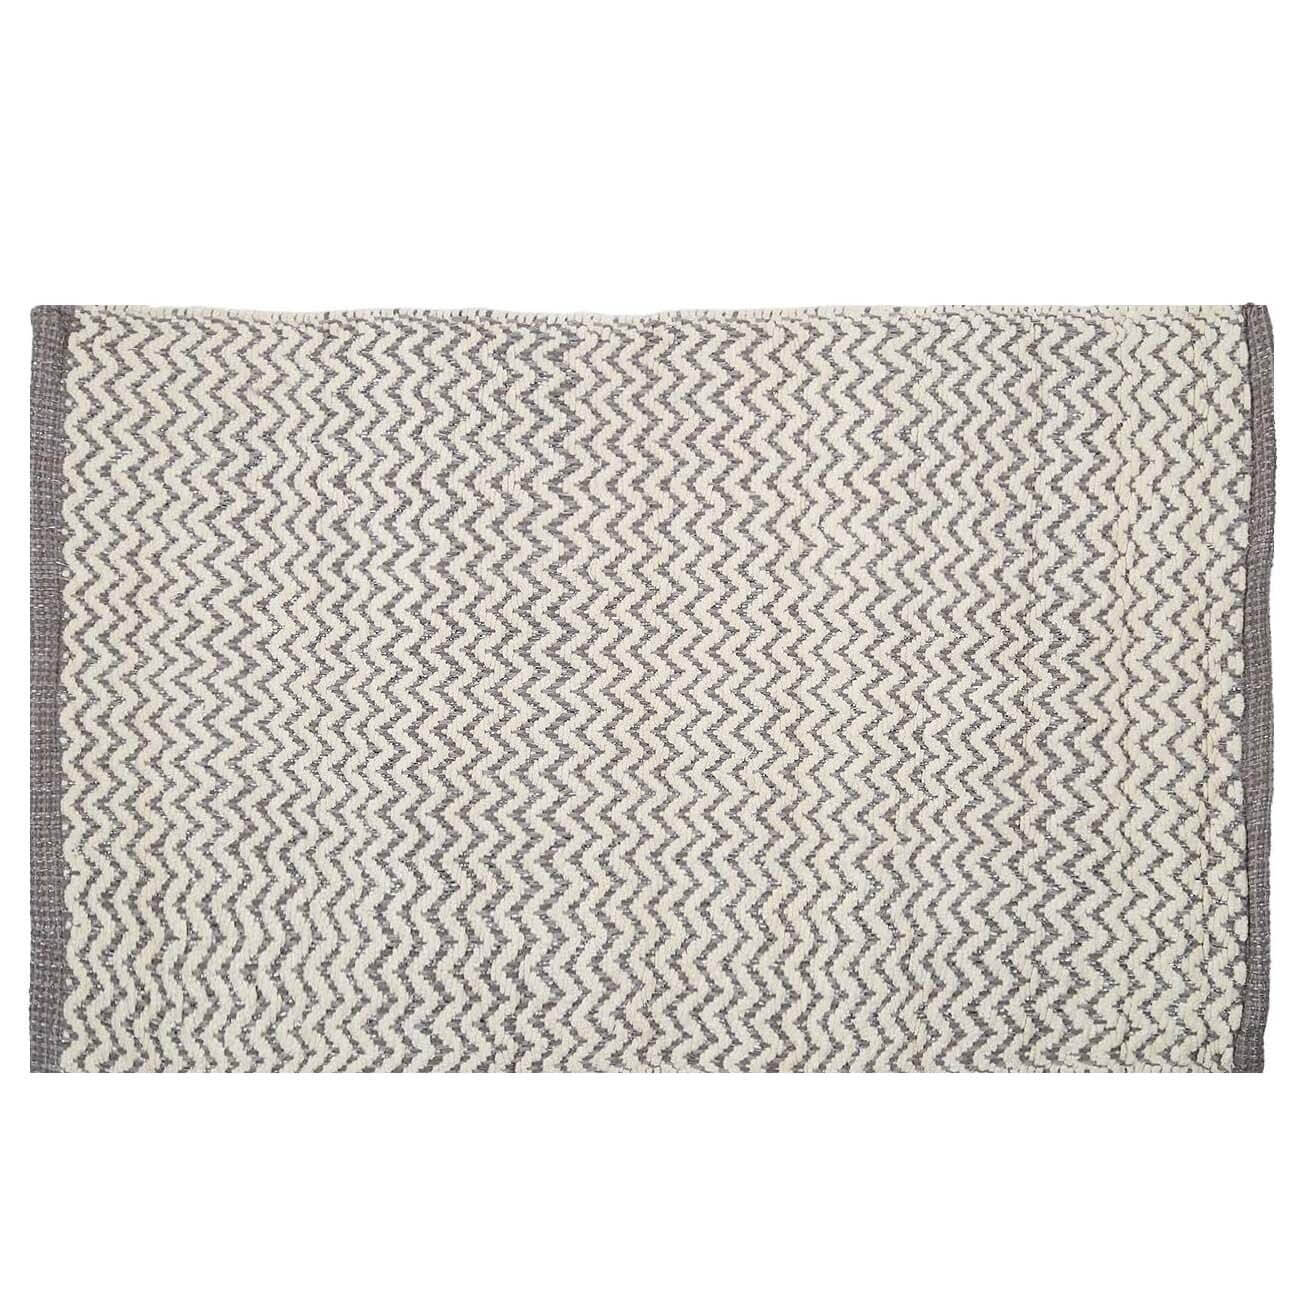 Коврик, 50х80 см, хлопок, бело-серый, Зигзаги с люрексом, Shiny threads коврик для лепки холодное сердце формат а4